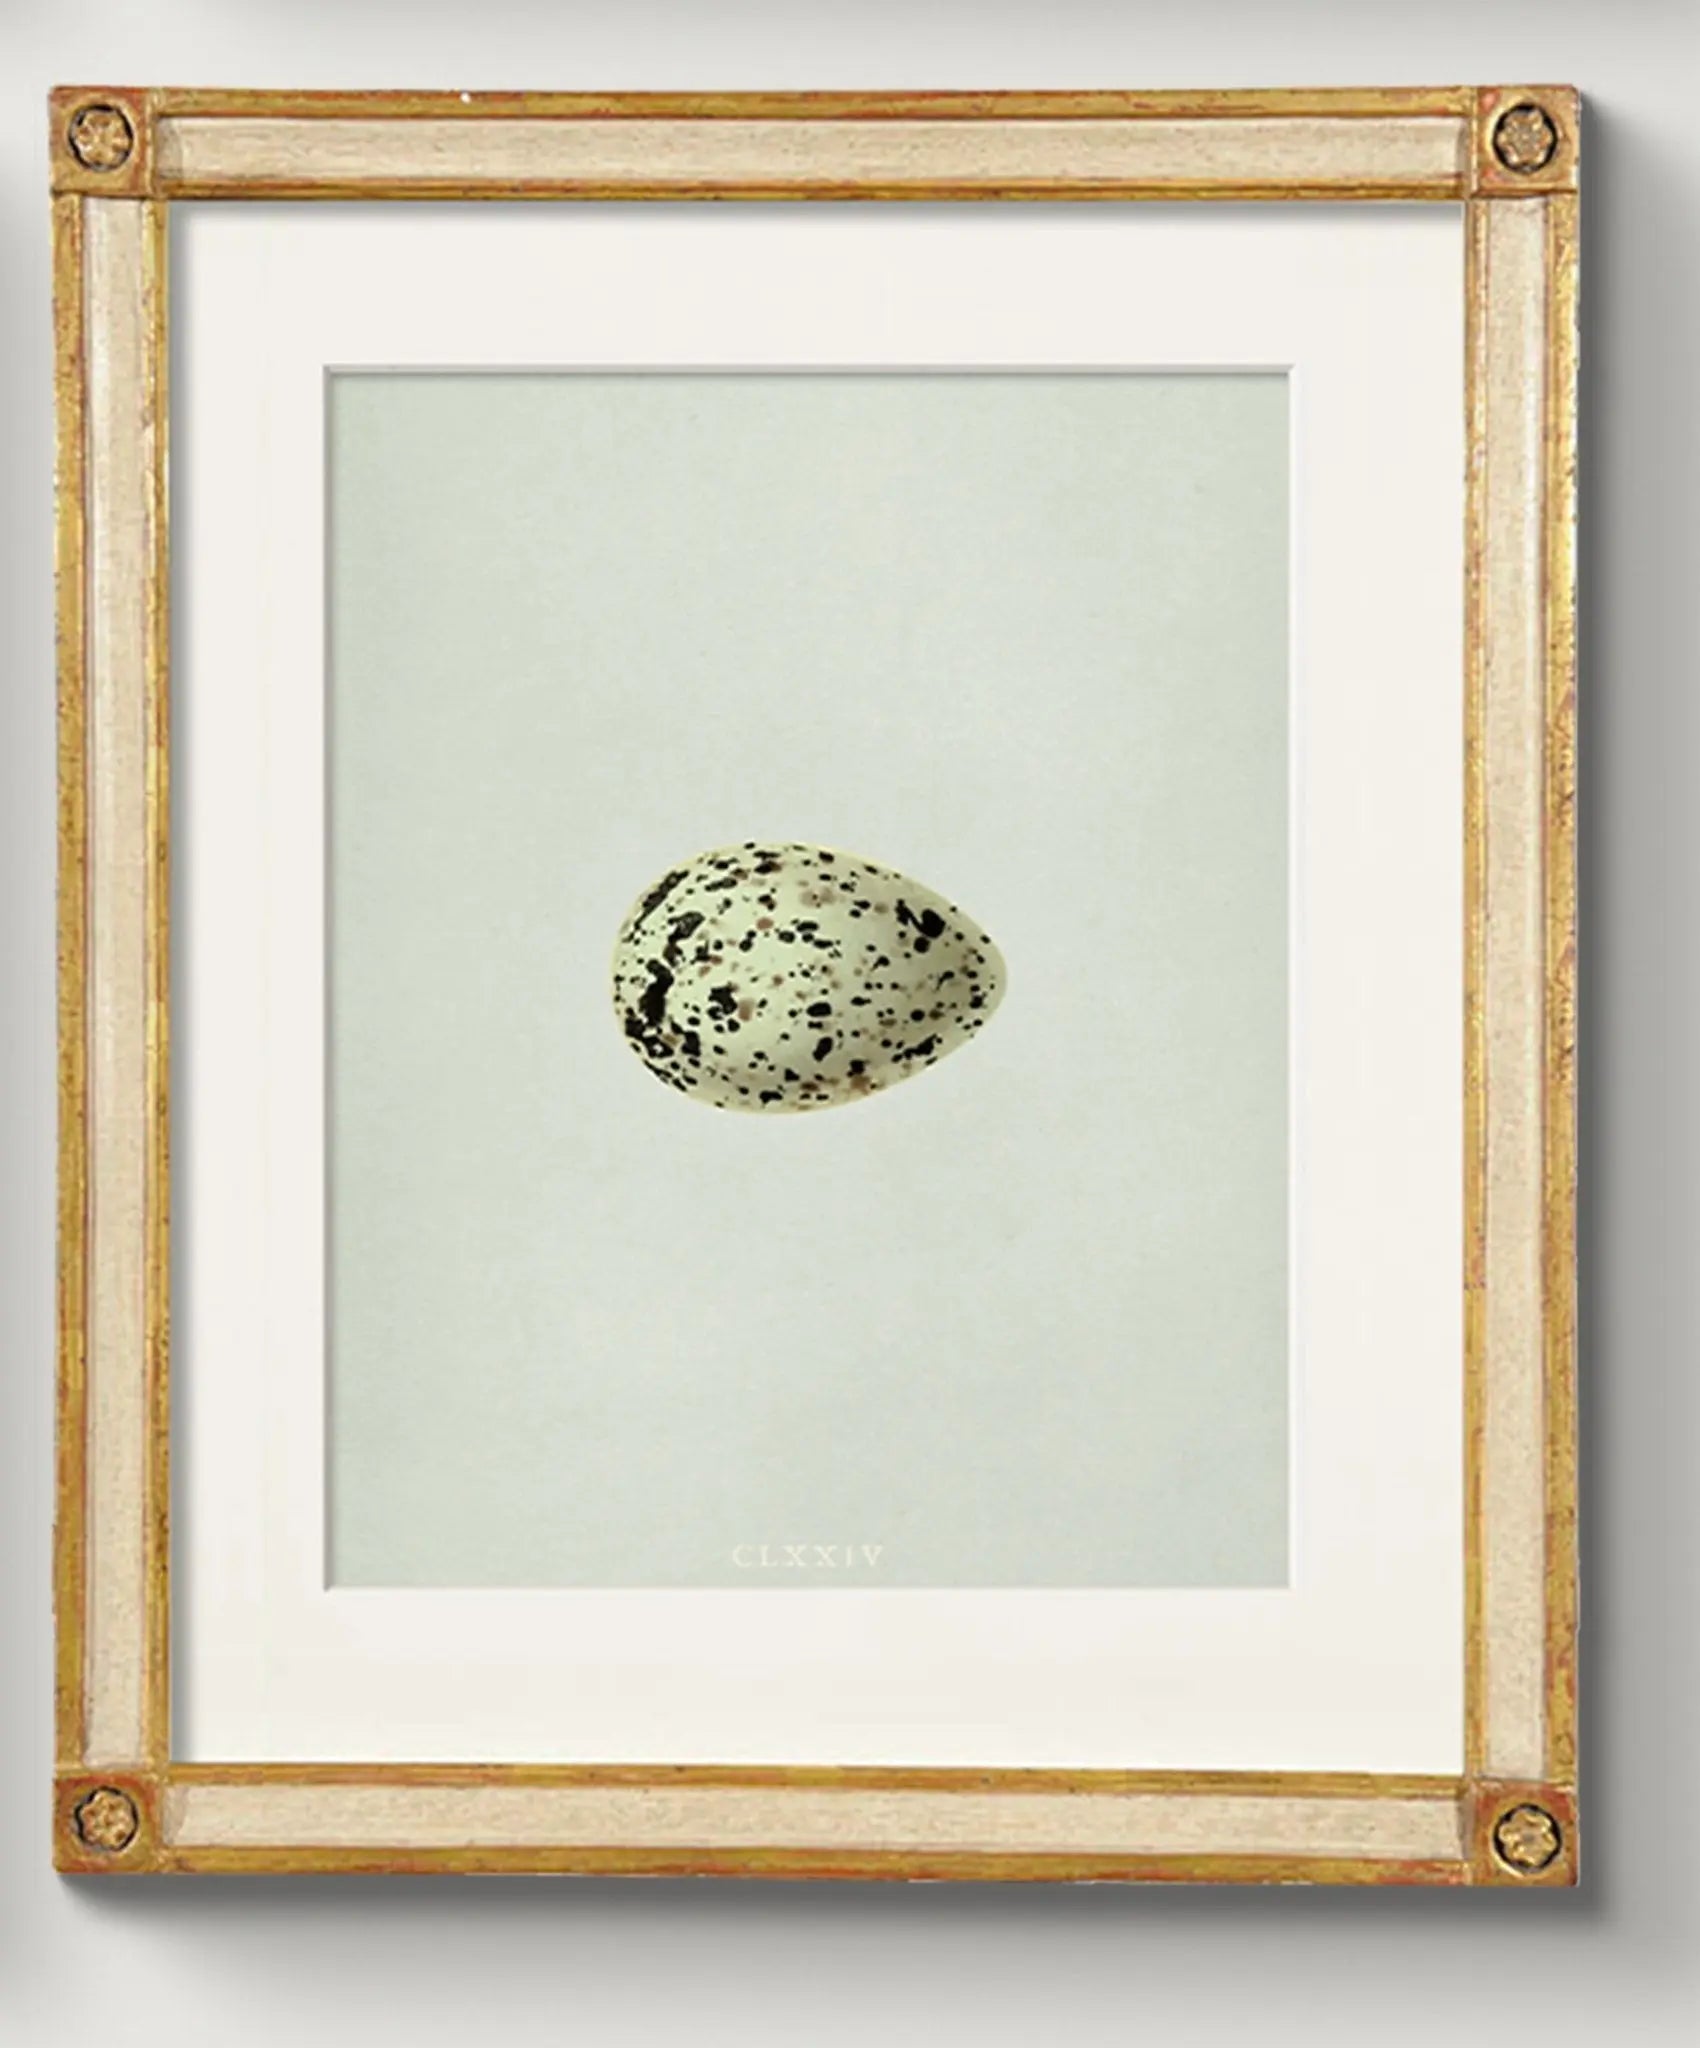 Woodblock Prints: Eggs of British Nesting Birds - Emblem Atelier